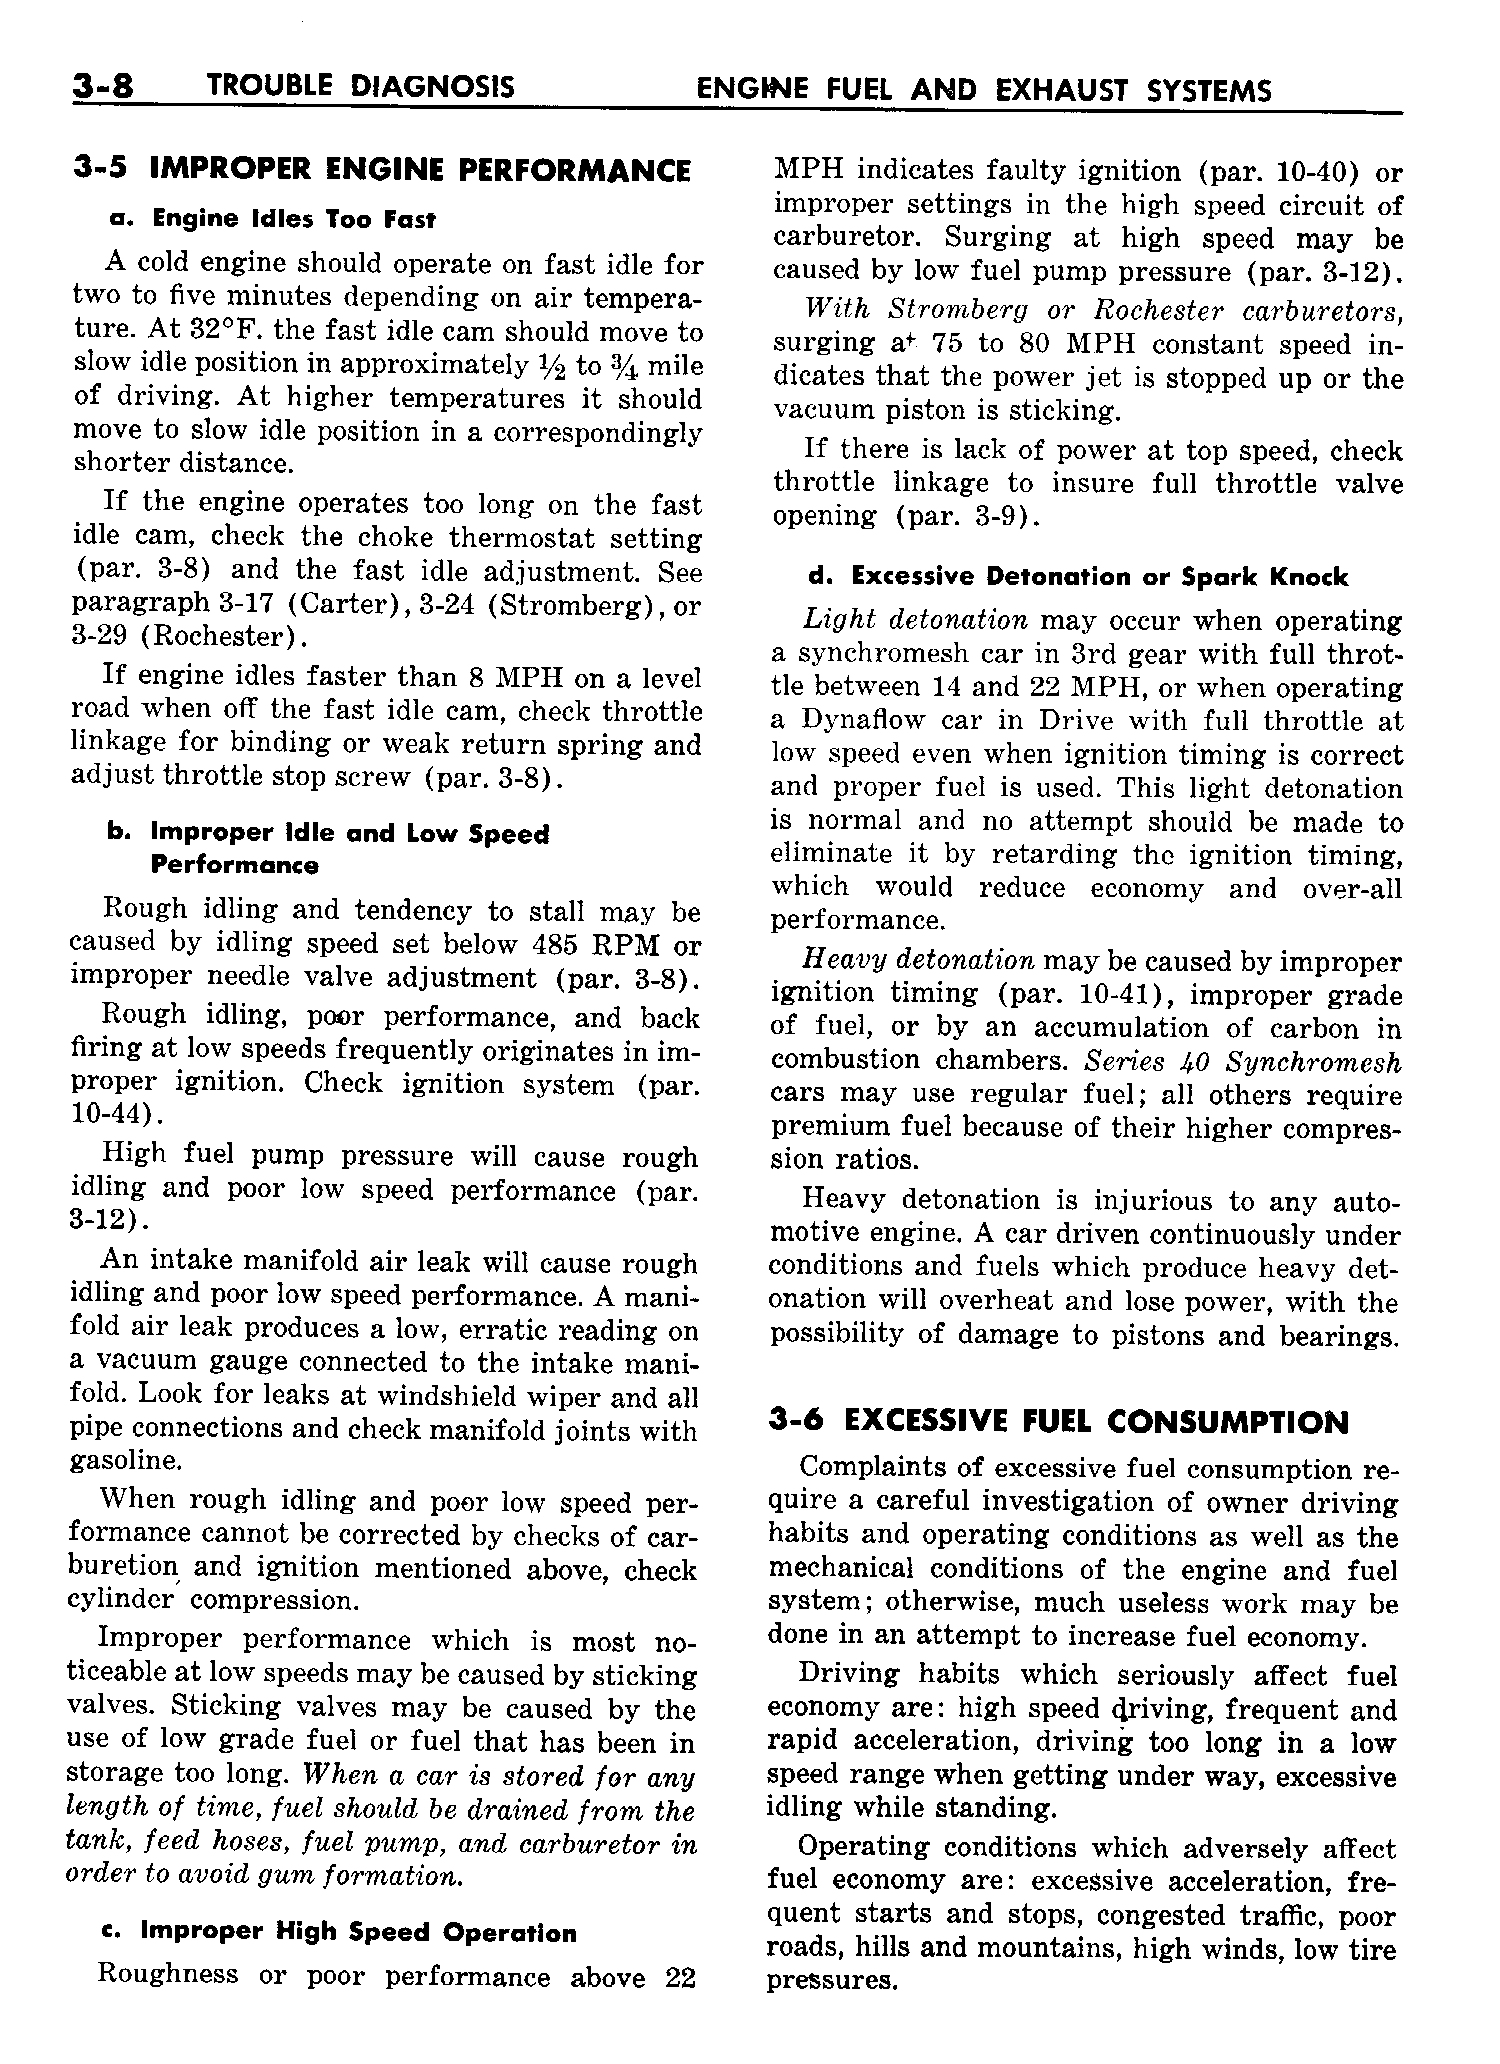 n_04 1958 Buick Shop Manual - Engine Fuel & Exhaust_8.jpg